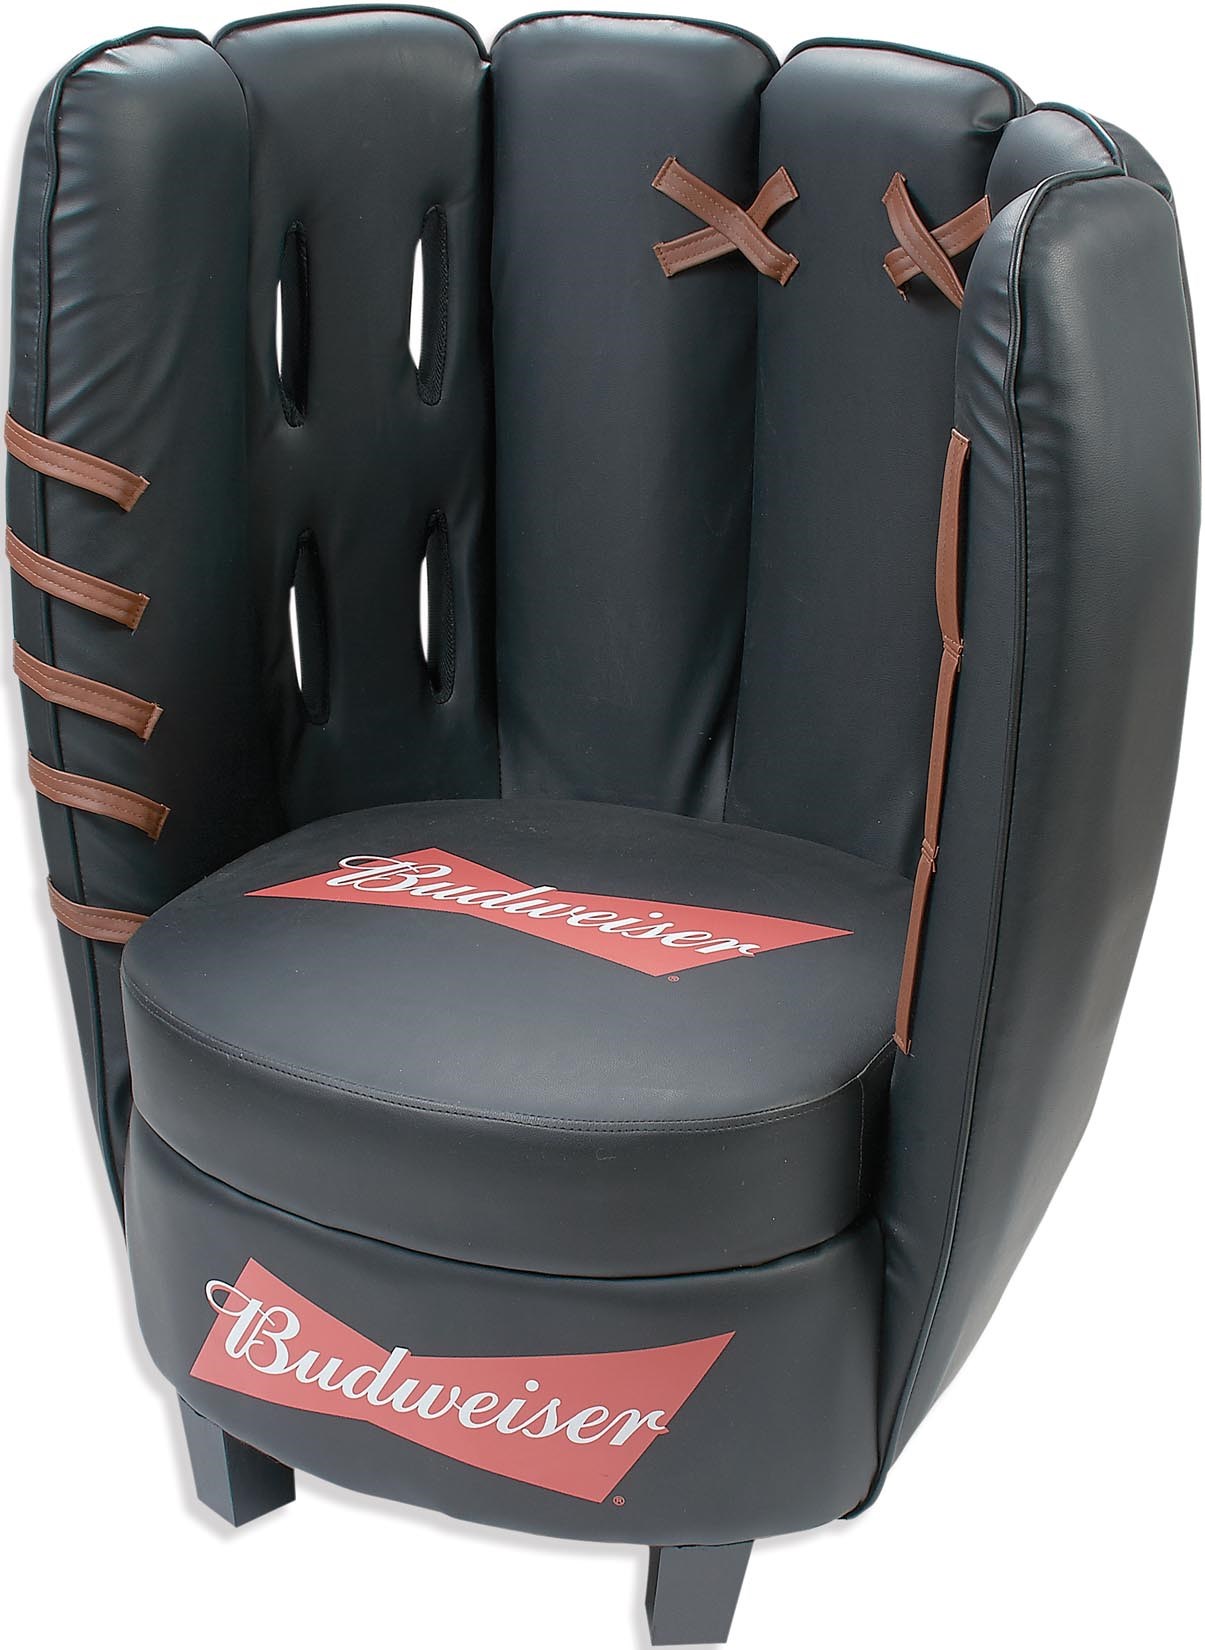 Giant Budweiser Beer Promotional Baseball Glove Chair